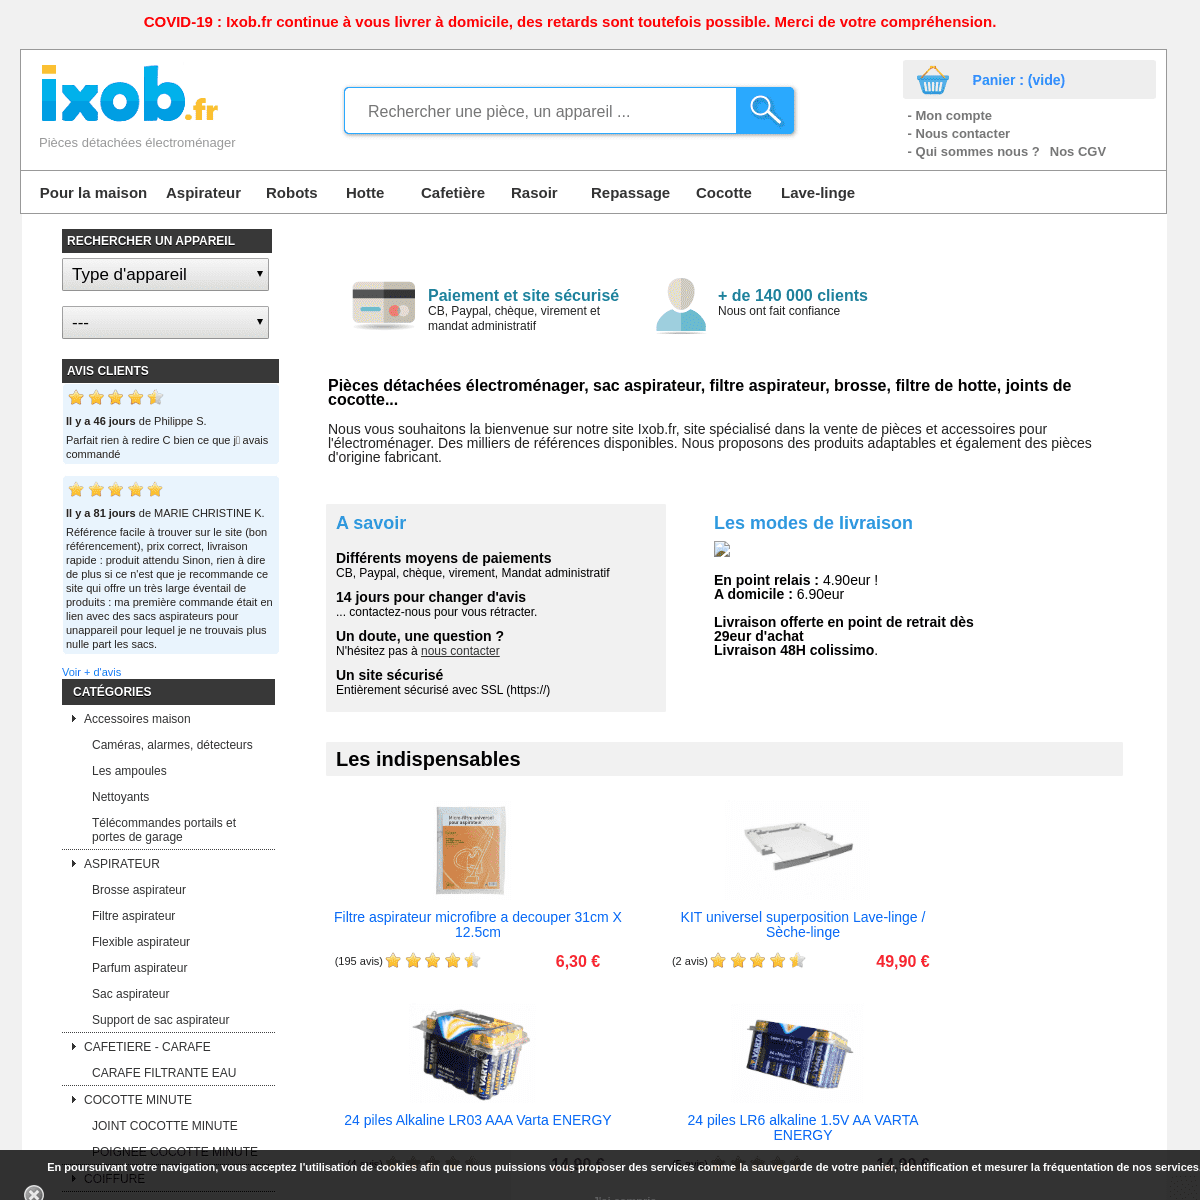 A complete backup of ixob.fr